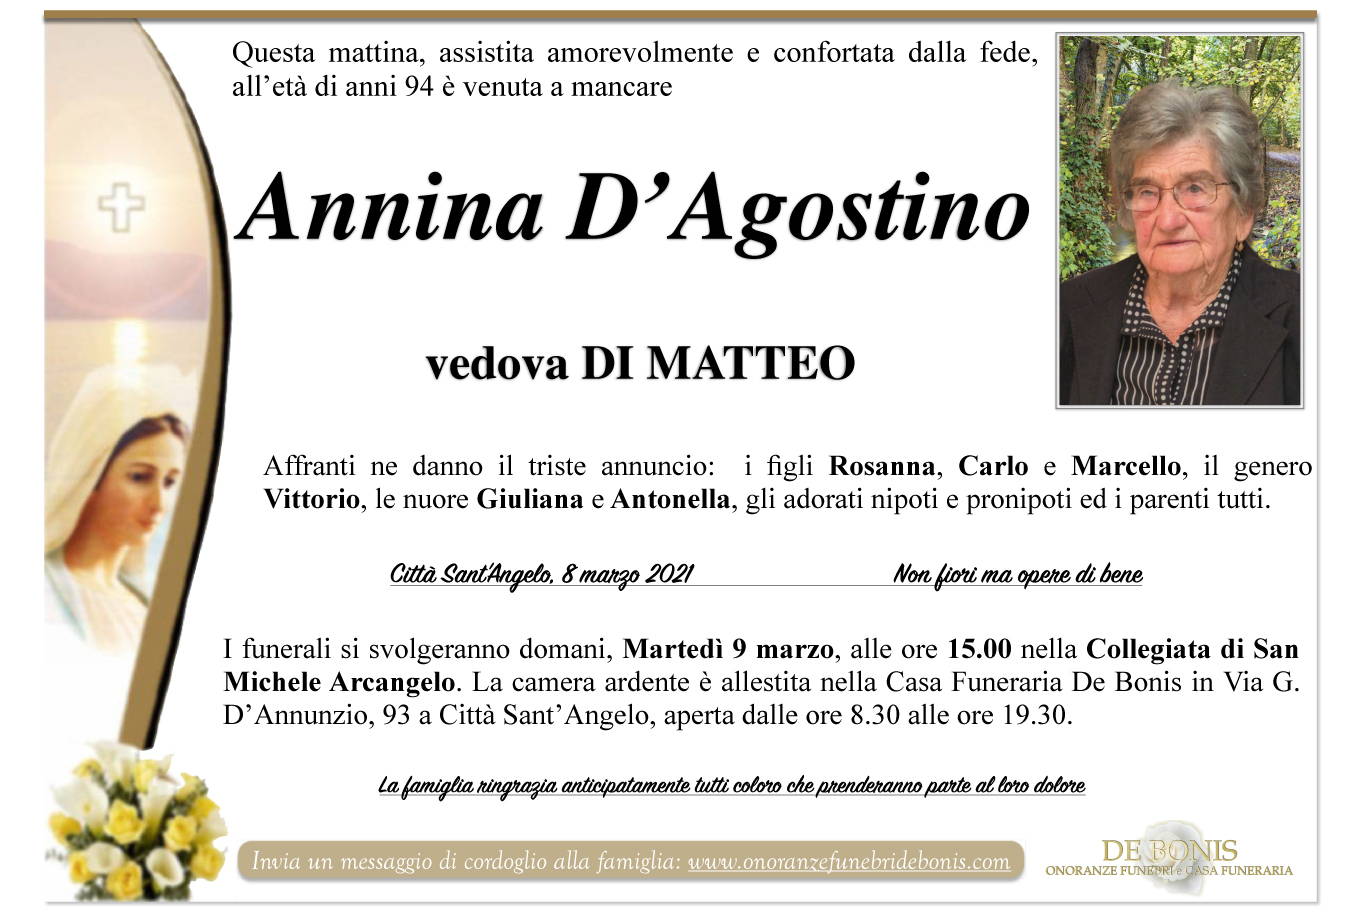 Annina D'Agostino